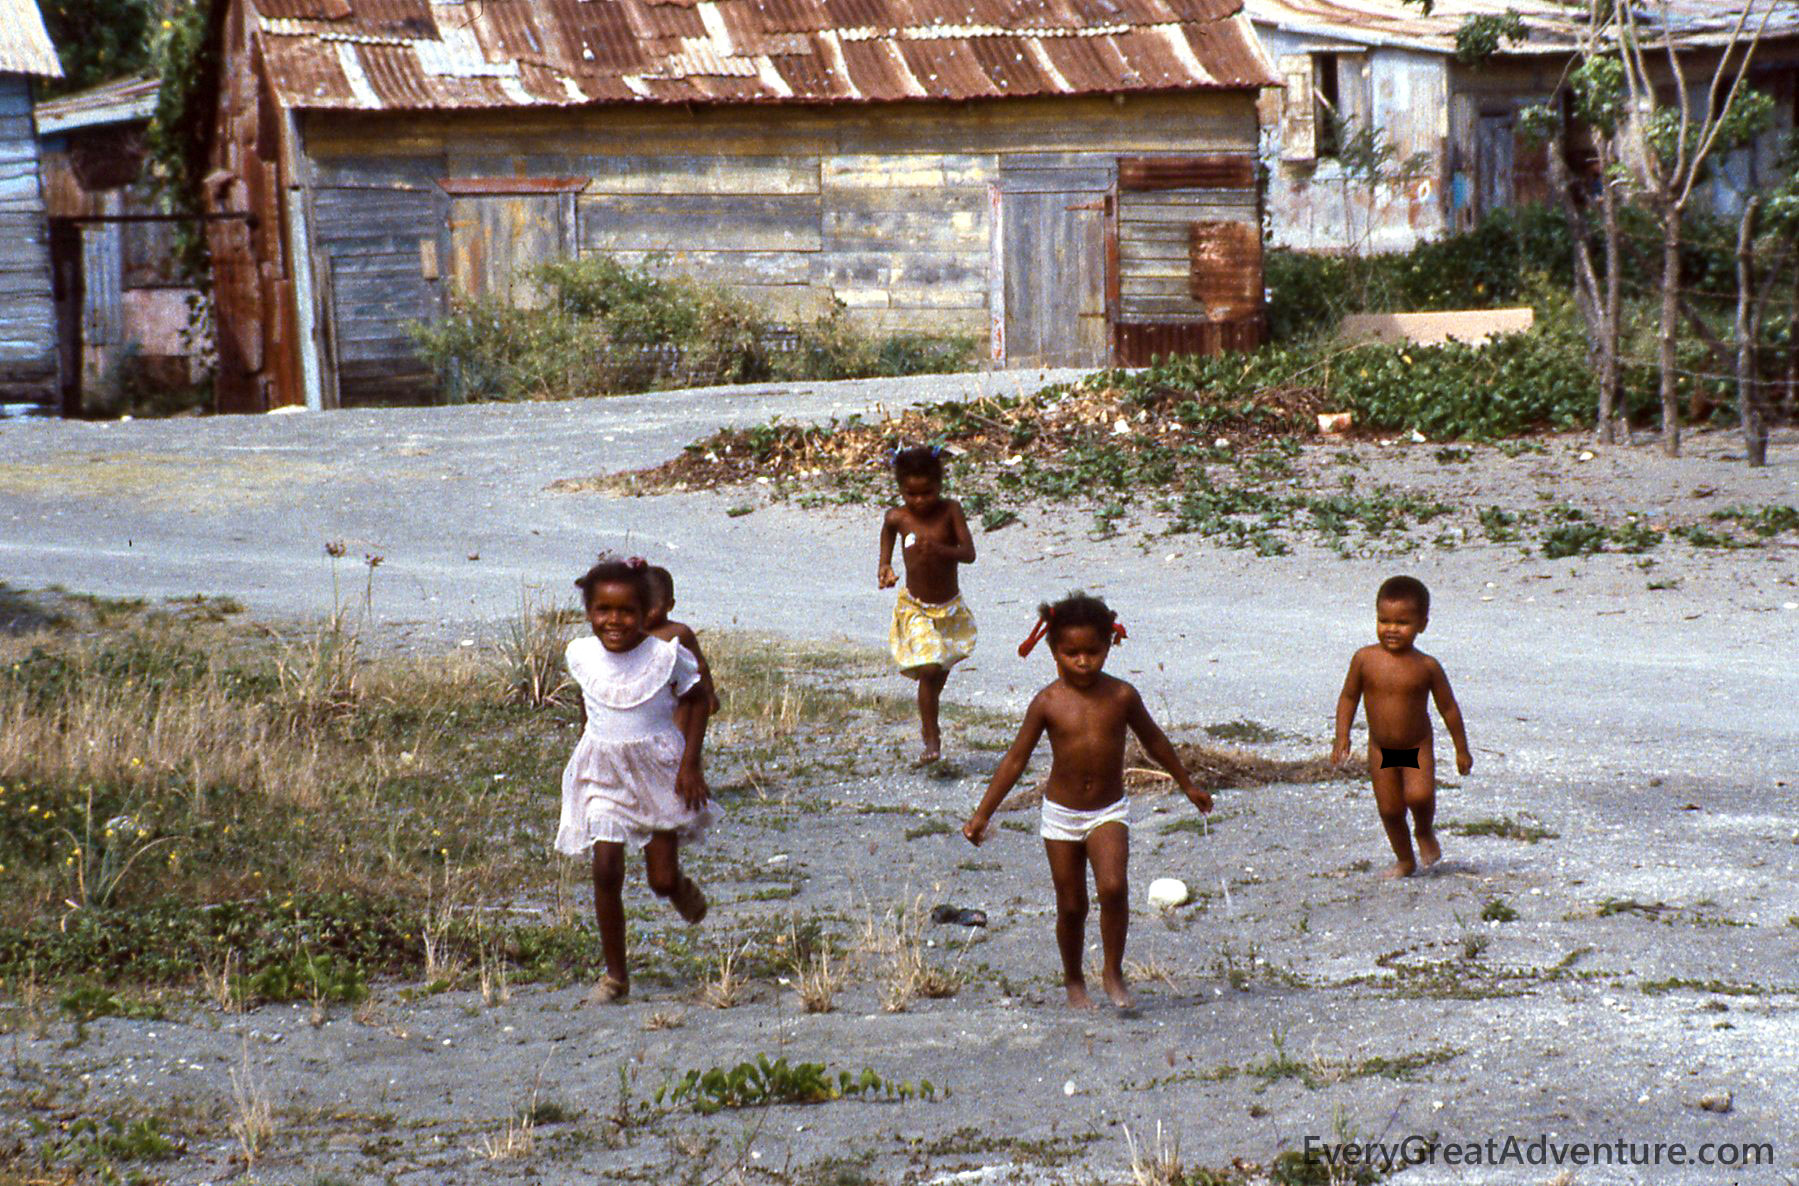 Children of Haiti, running toward photographer, through dirt, wearing few clothes